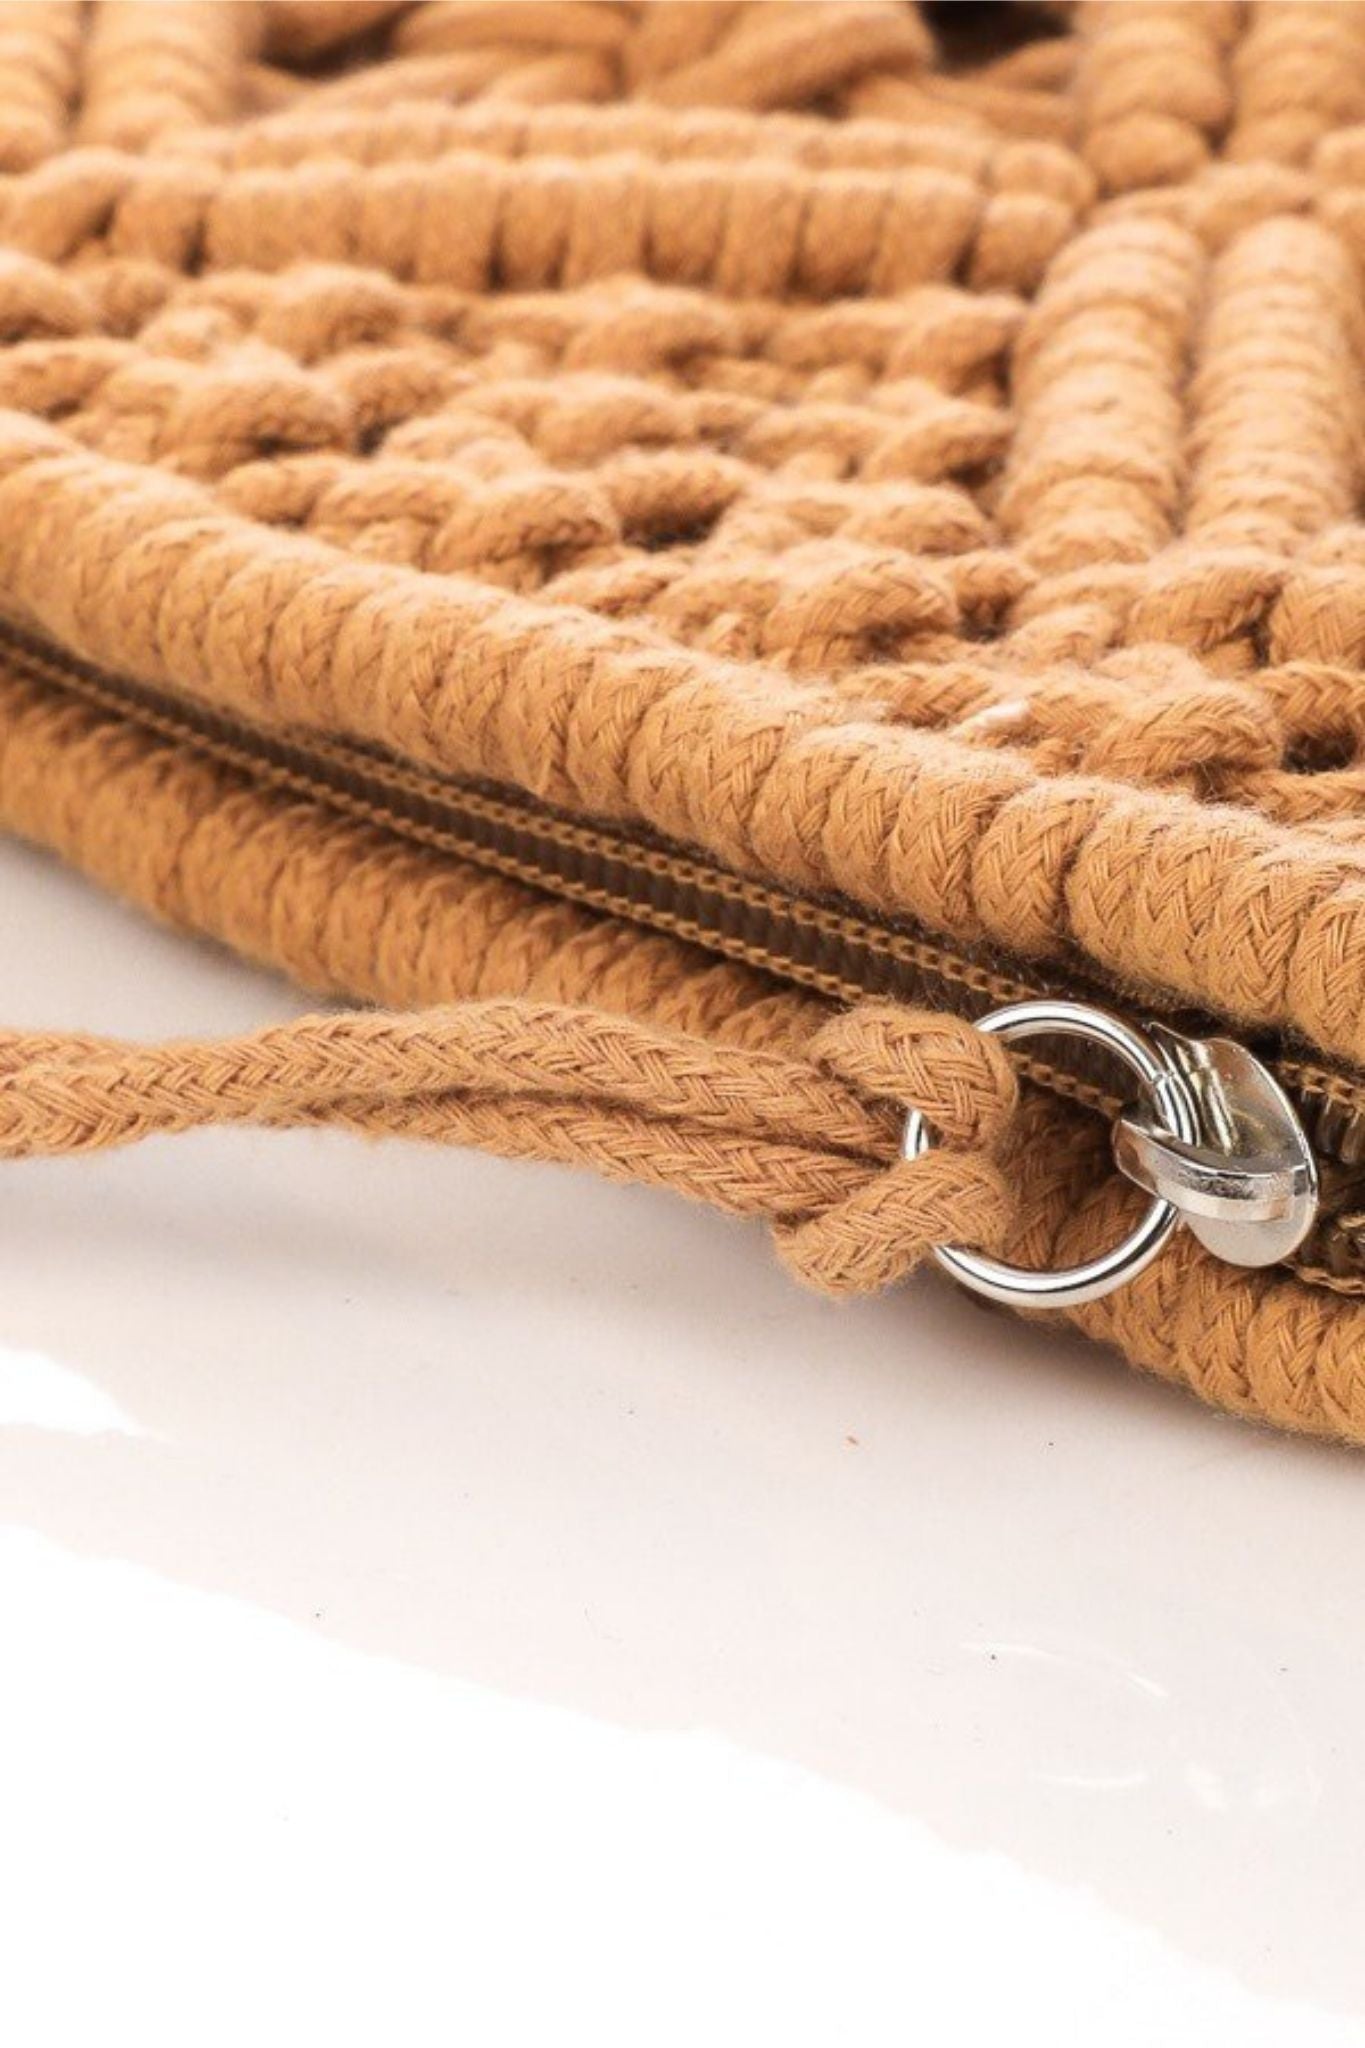 View 3 of Crochet Tassel Clutch in Tan, a Bags from Larrea Cove. Detail: .